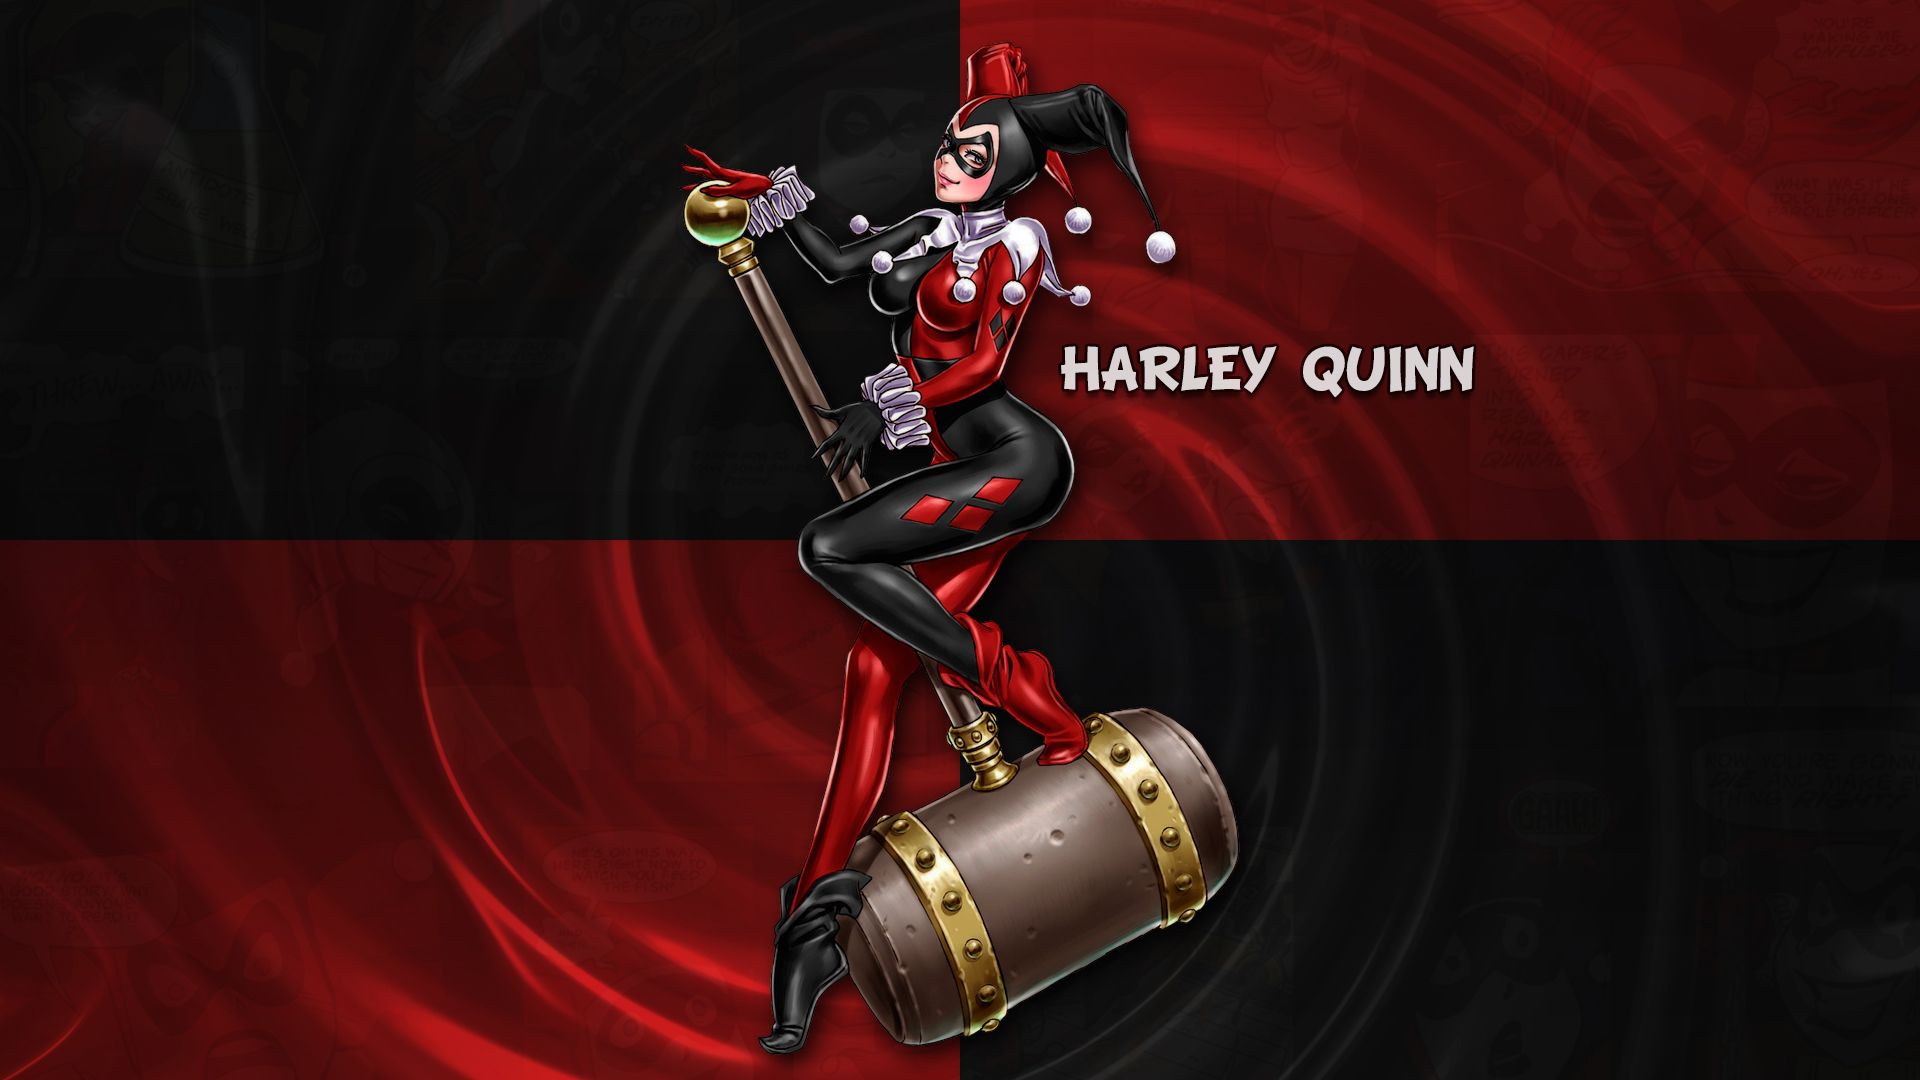 Harley Quinn Background Desktop